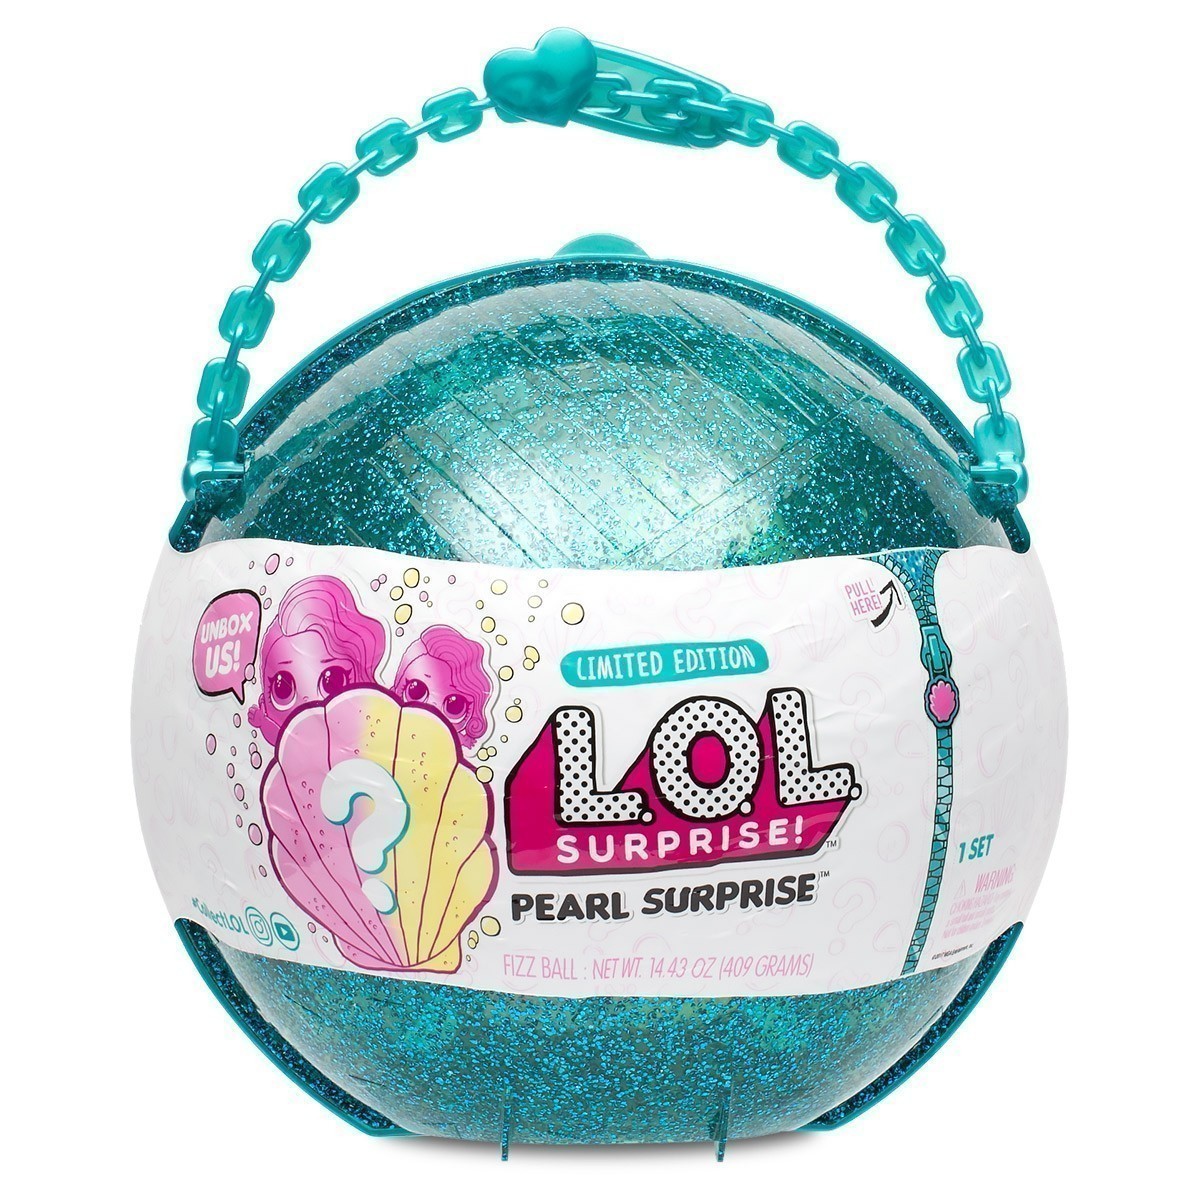 LOL Surprise - Pearl Surprise Limited Edition